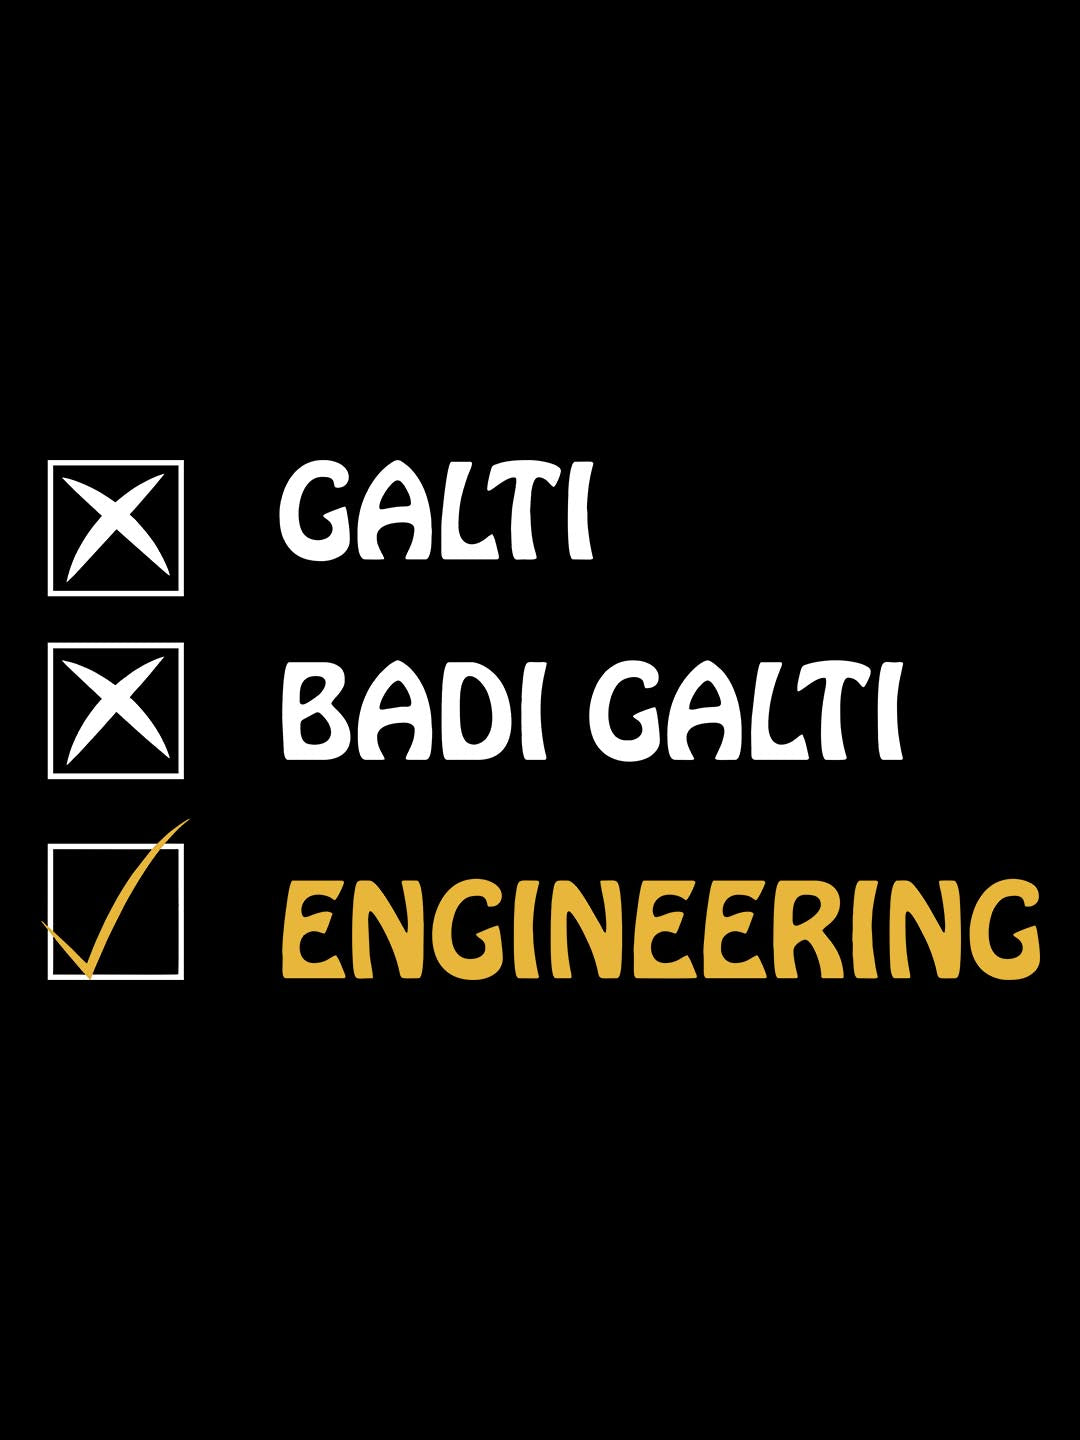 GALTI ENGINEERING BLACK T-SHIRT